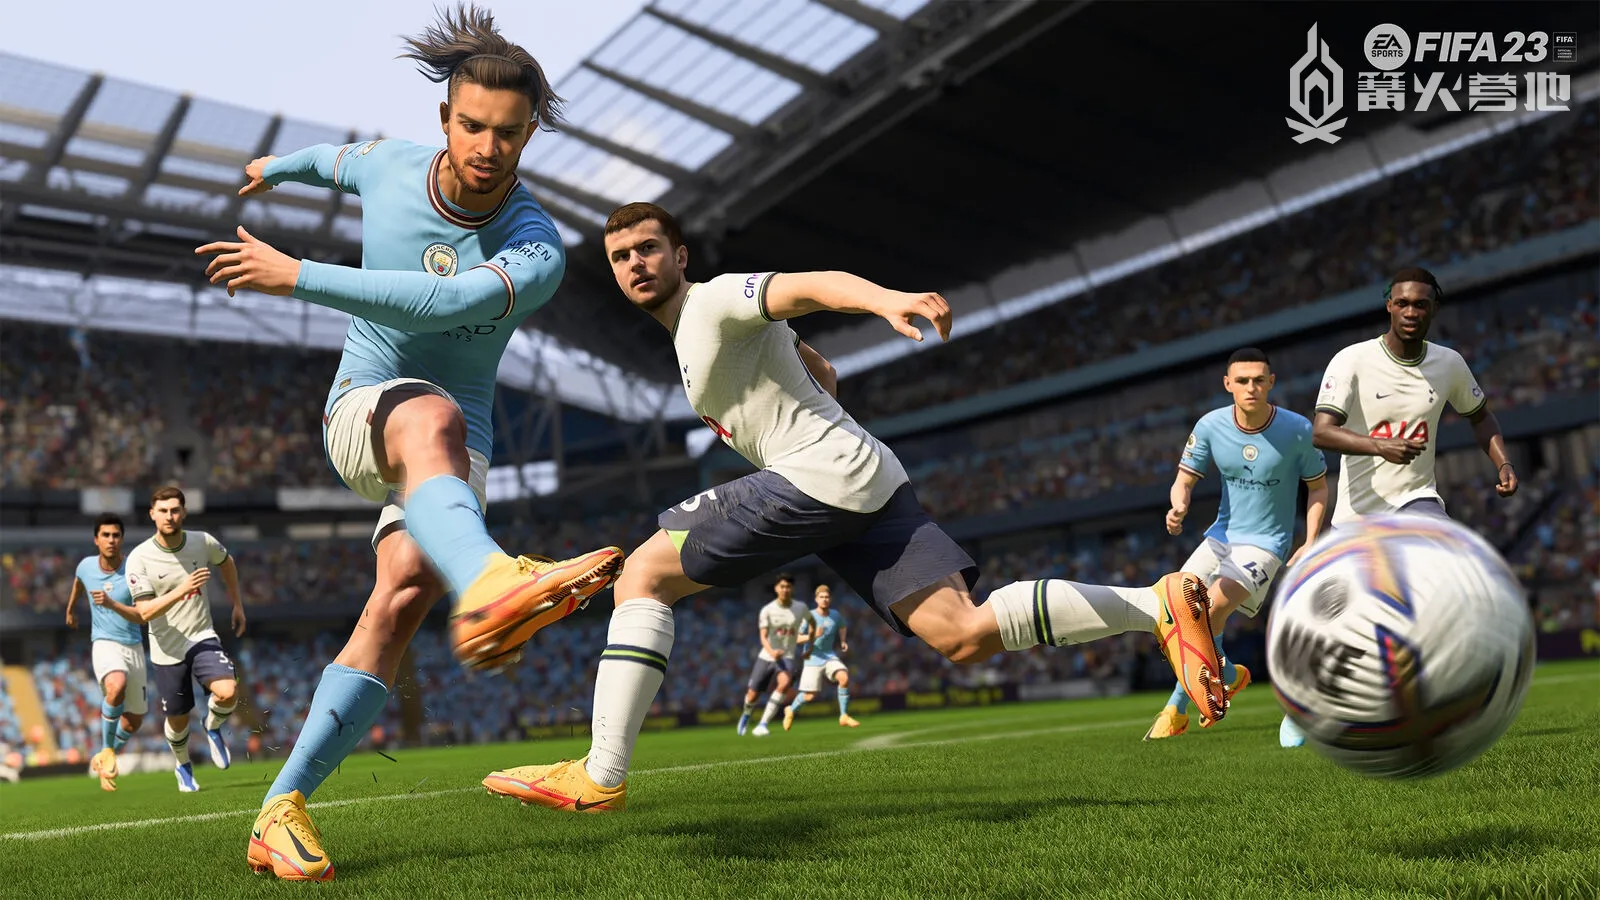 《FIFA 23》最值得關注的 10 大特色